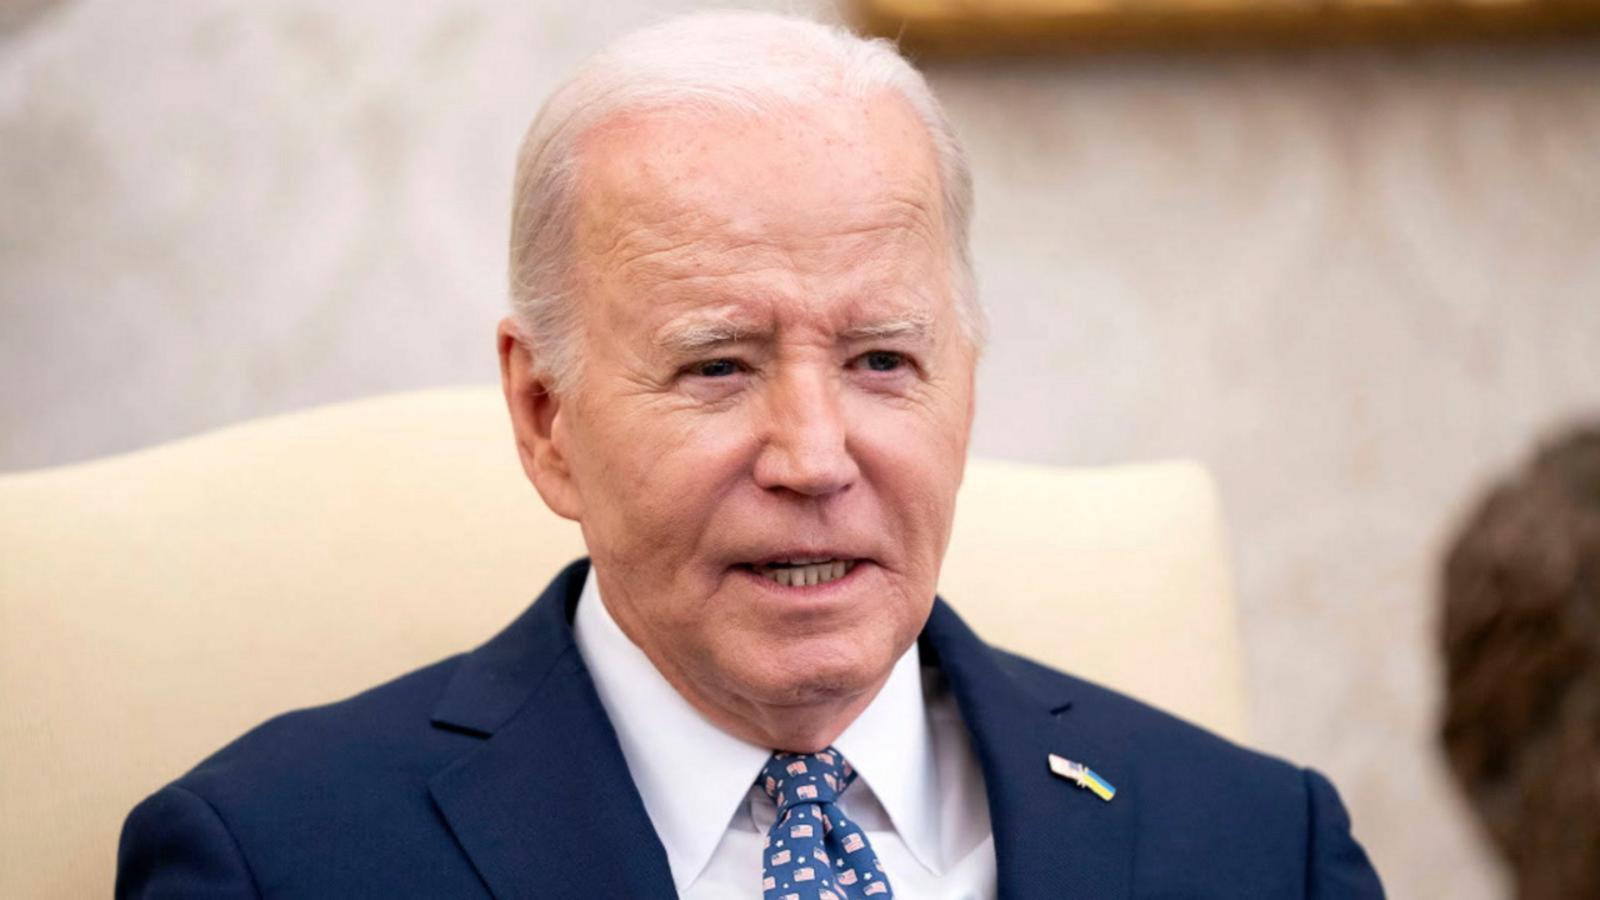 VIDEO: Biden set to issue executive order on women’s health